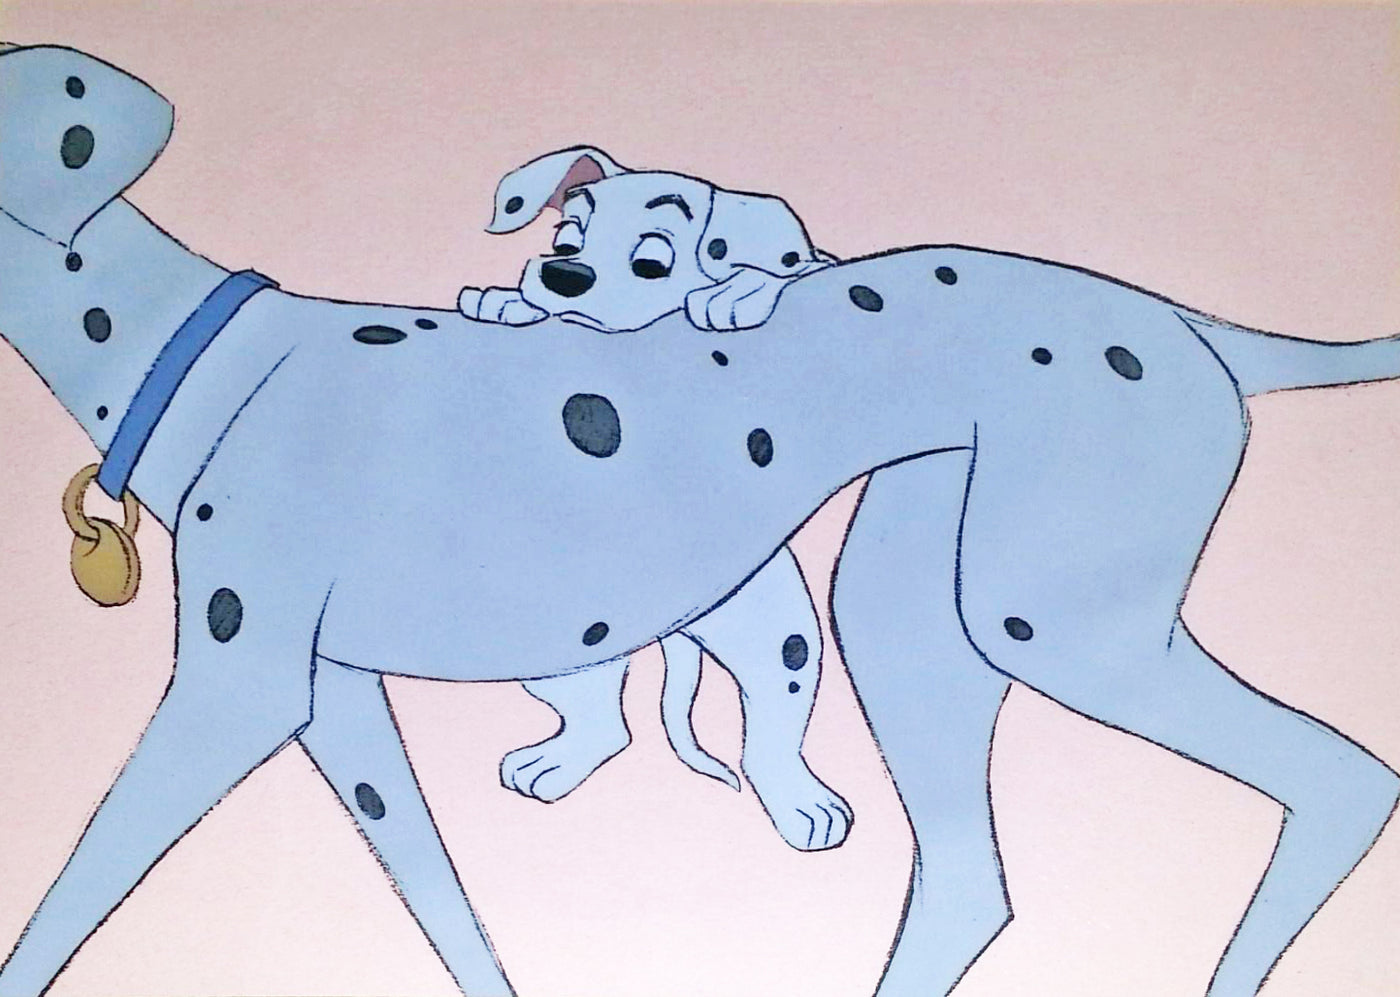 Original Walt Disney Production Cel from 101 Dalmatians featuring Perdita and puppy